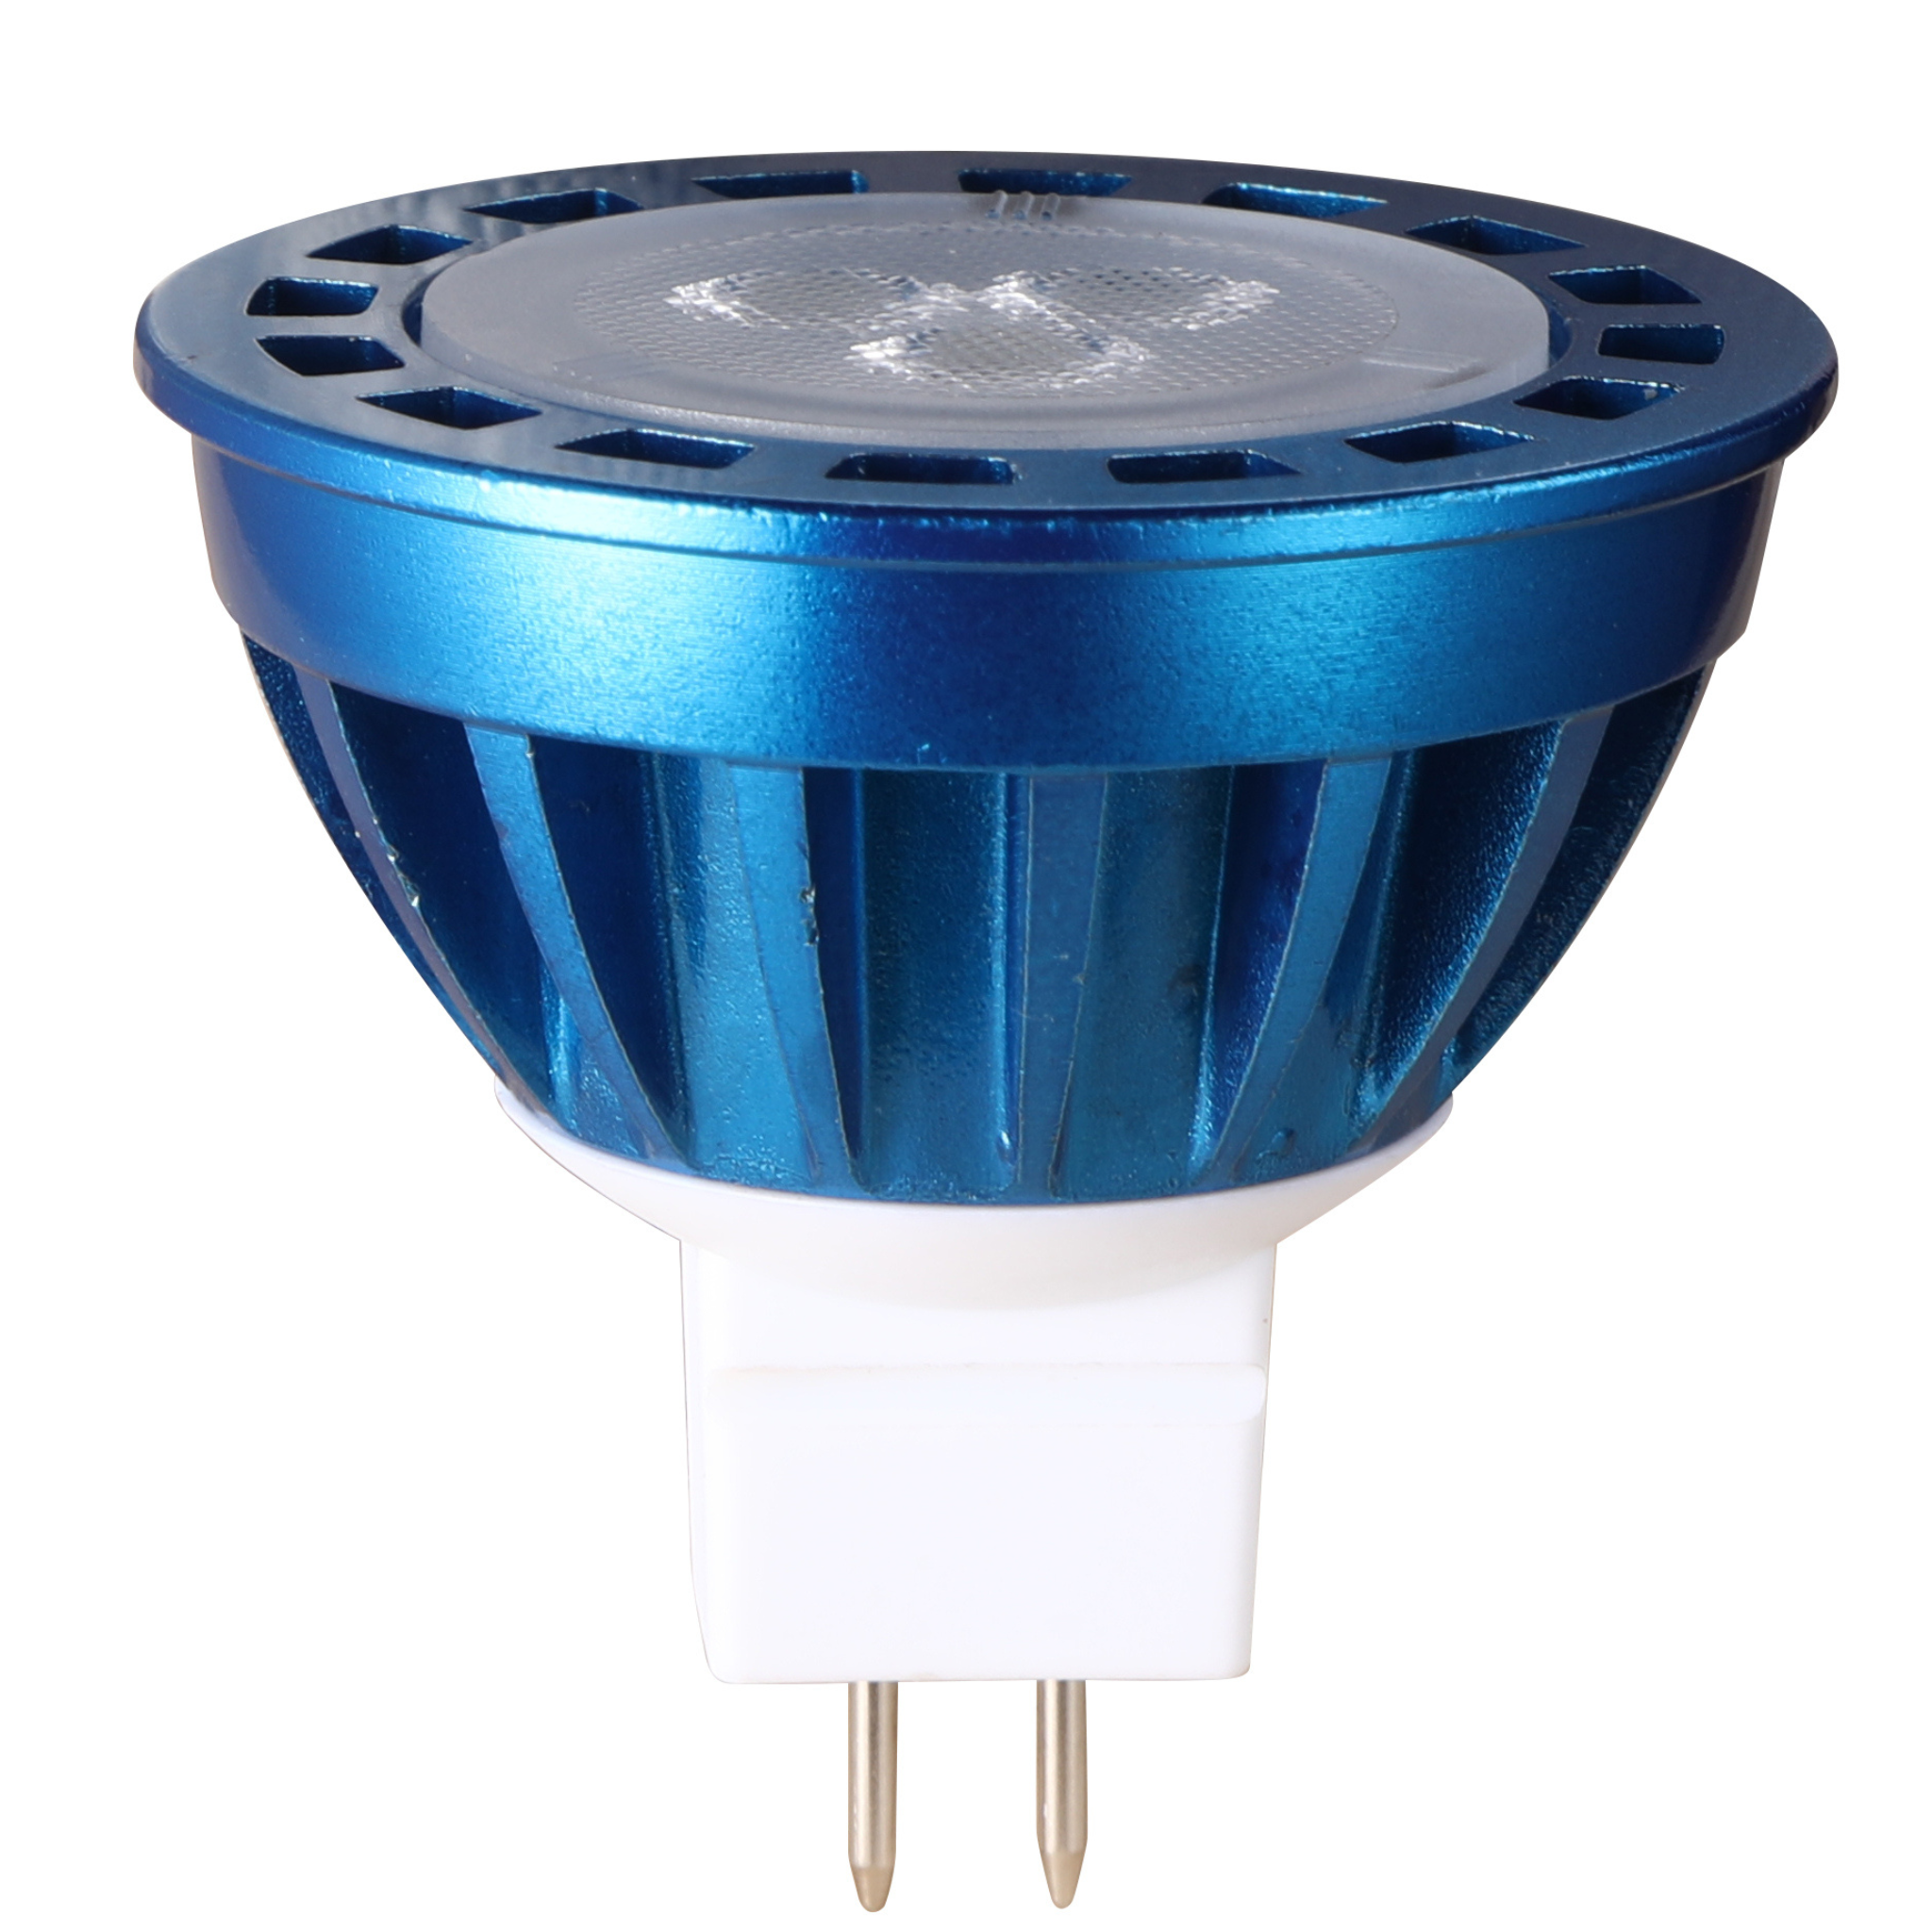 12-Pack LED Landscape Spot Light Kit 5W MR16 Bulb Included